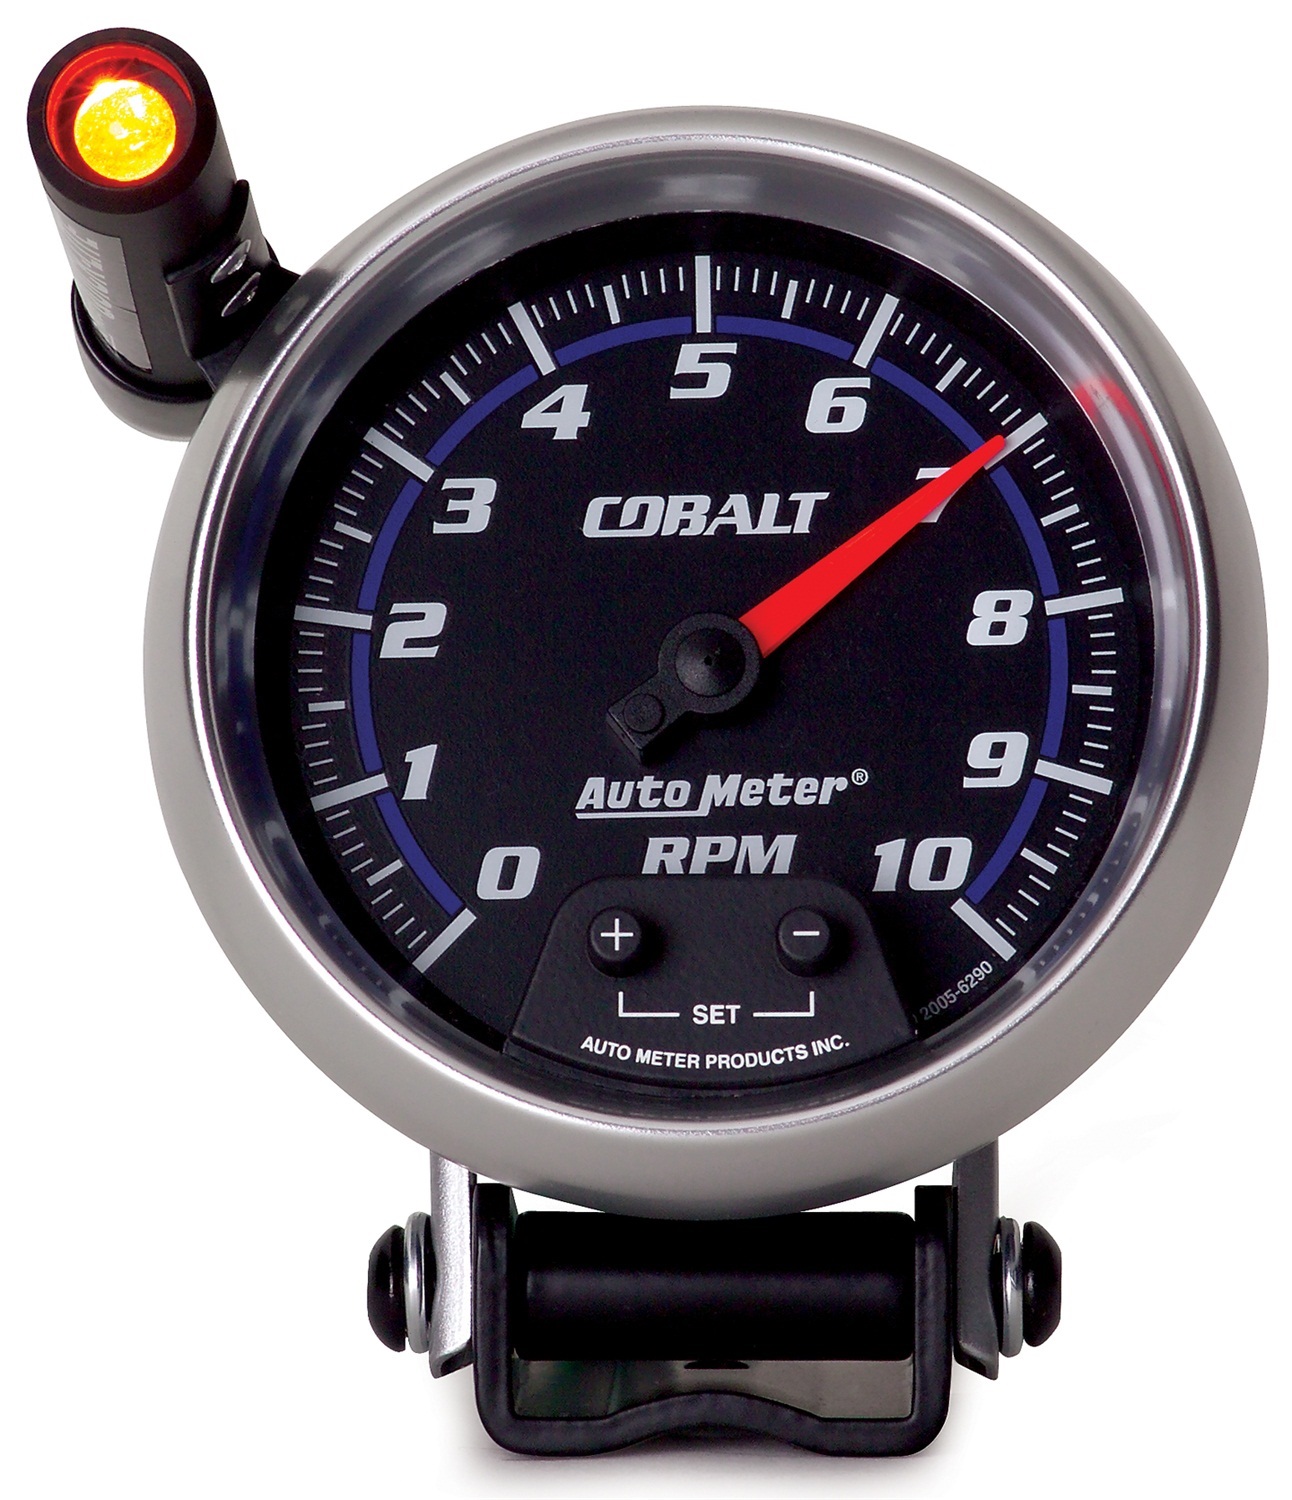 Auto Meter Auto Meter 6290 Cobalt; Tachometer